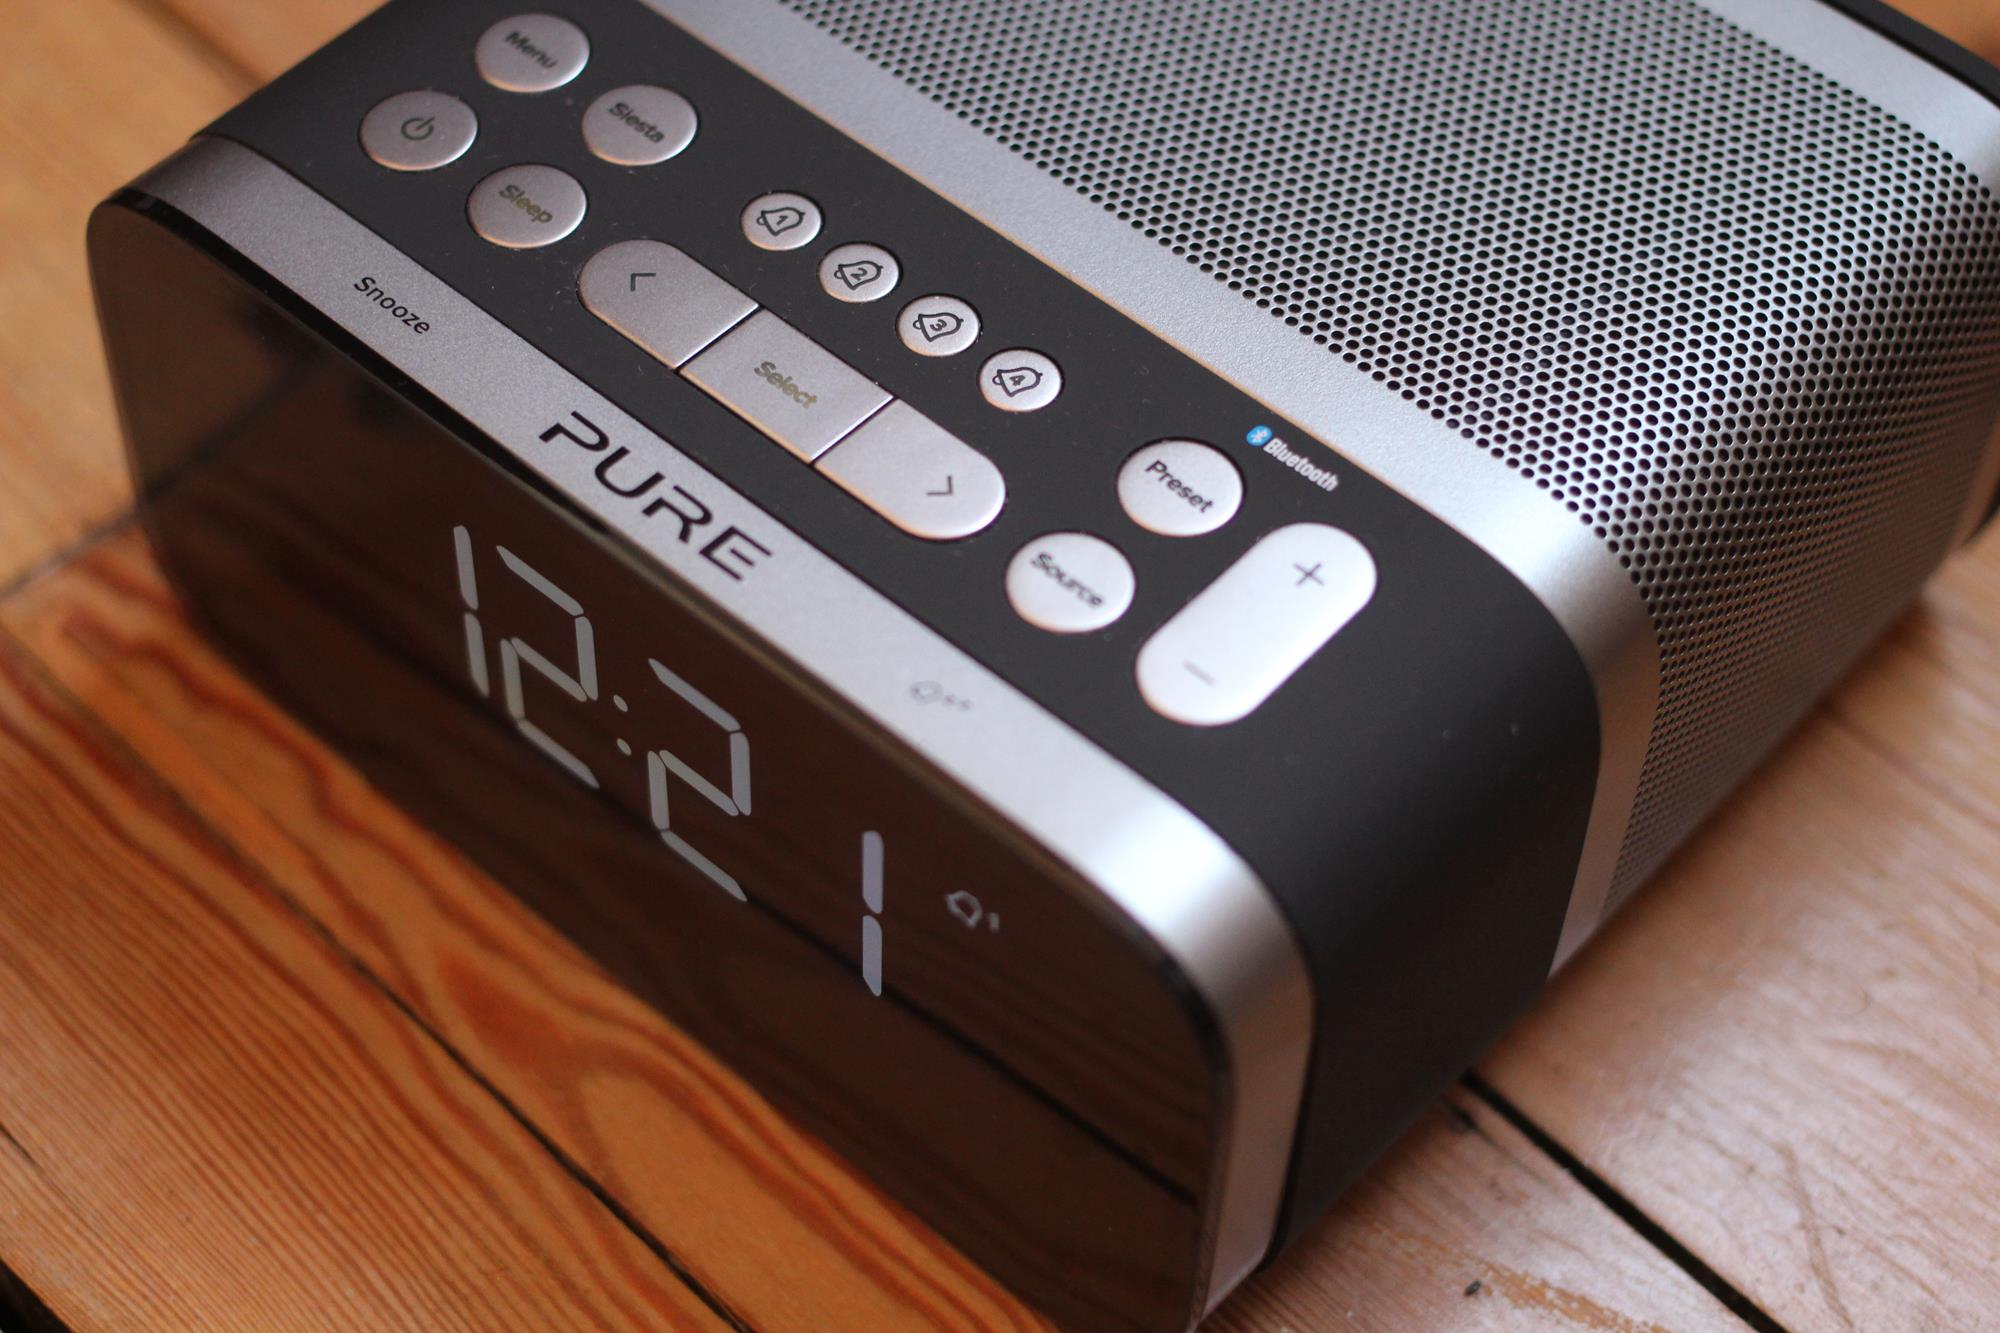 Pure Siesta S6 digital alarm clock radio on wooden surface